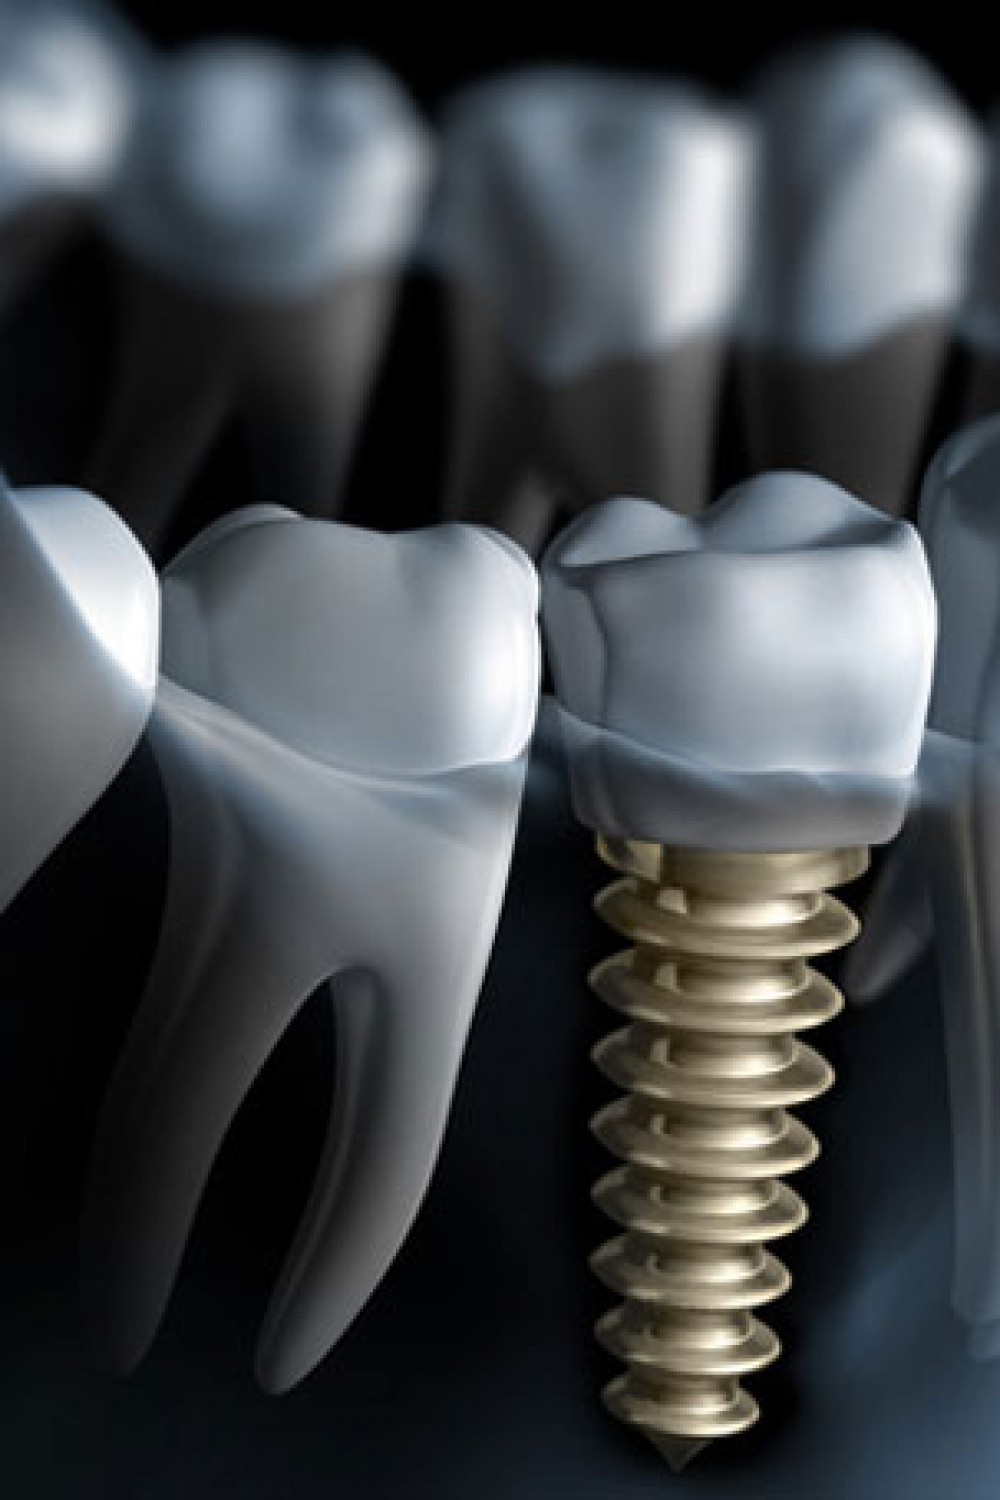 dental-implant-4